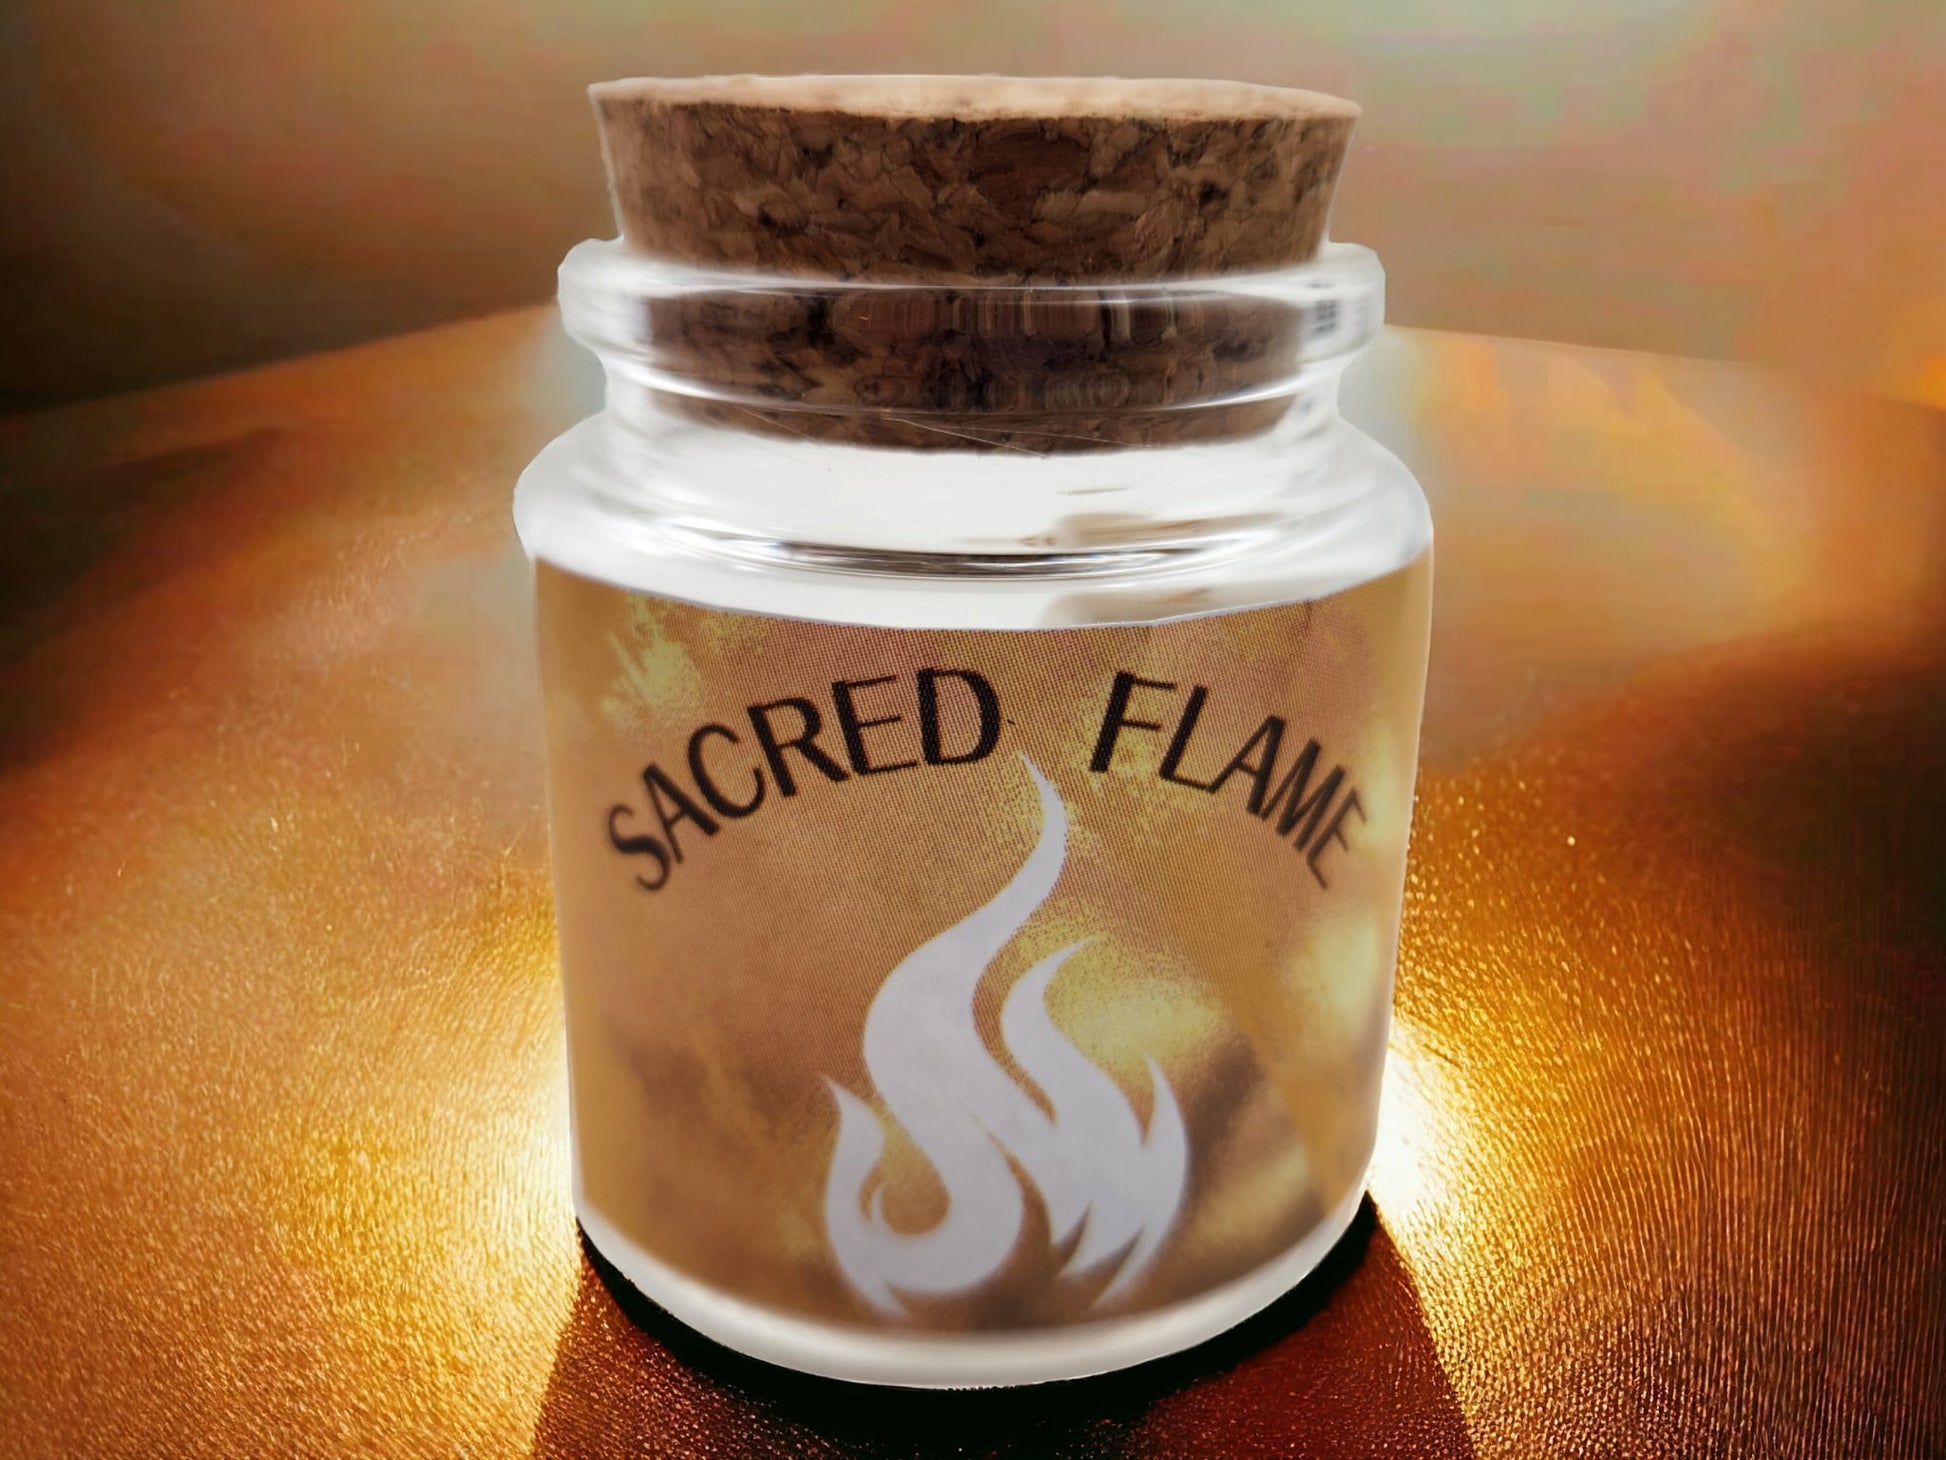 Sacred Flame spell dice jar - Rowan Gate